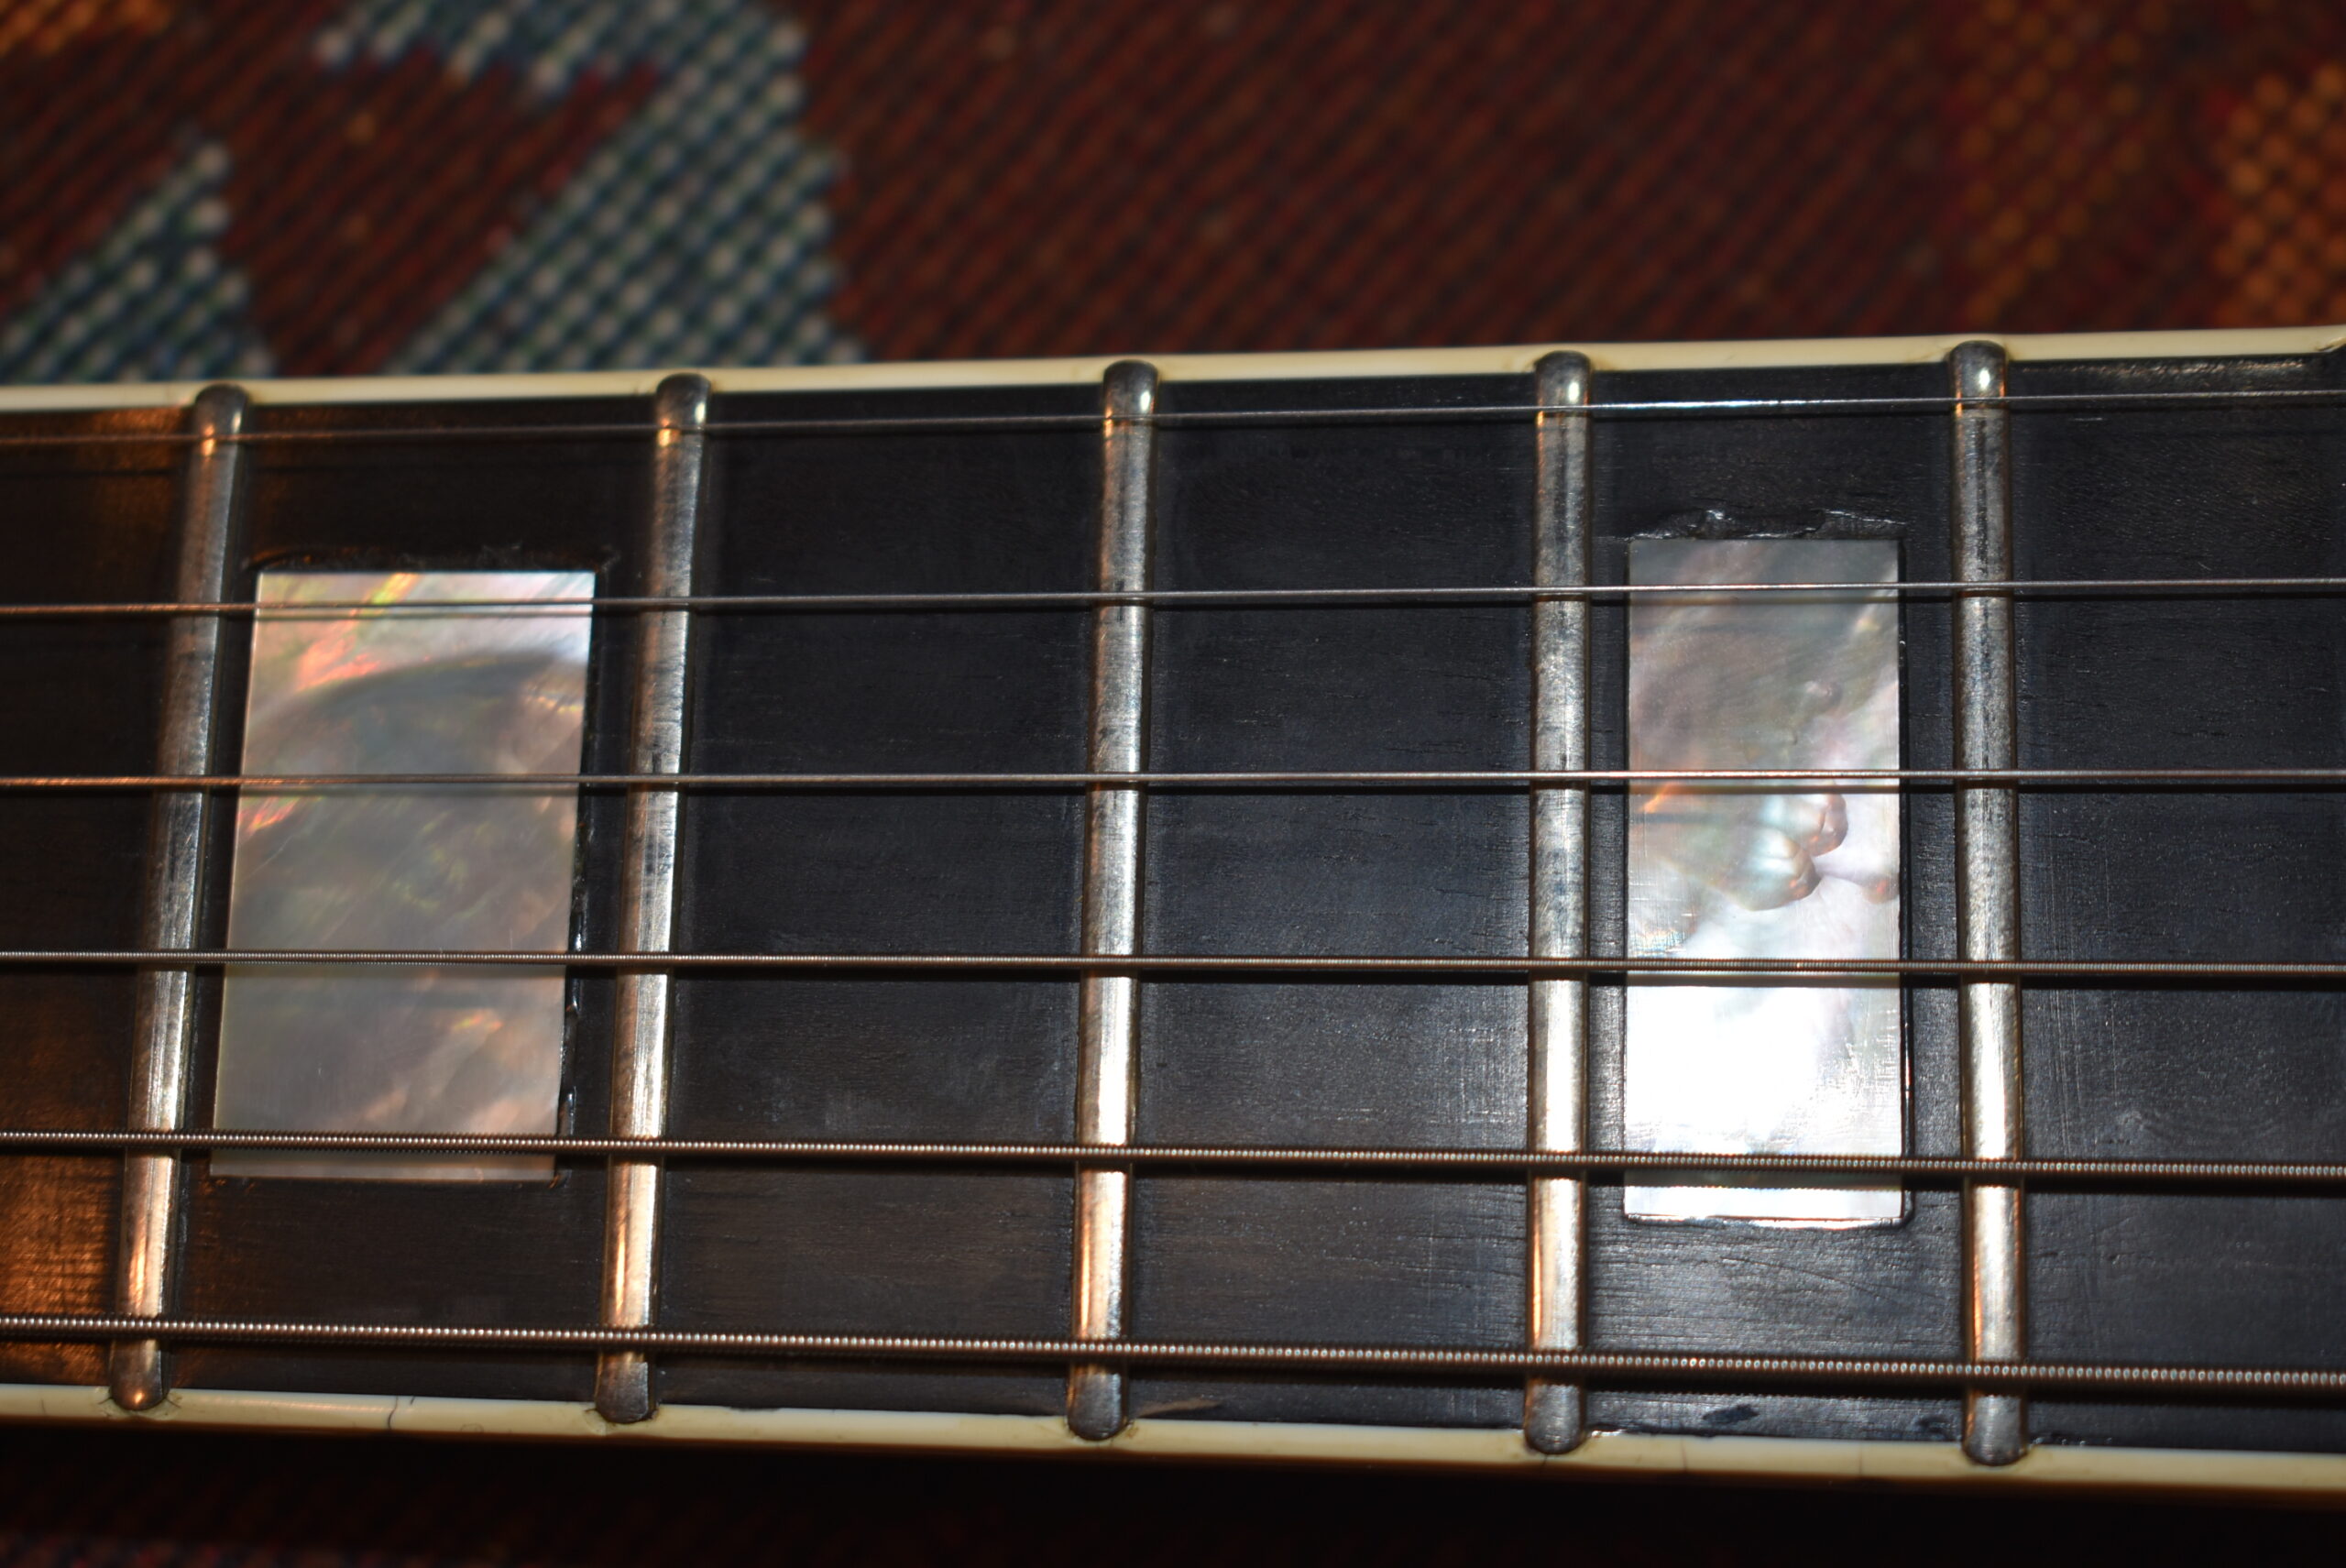 1976 Gibson Les Paul Custom Black